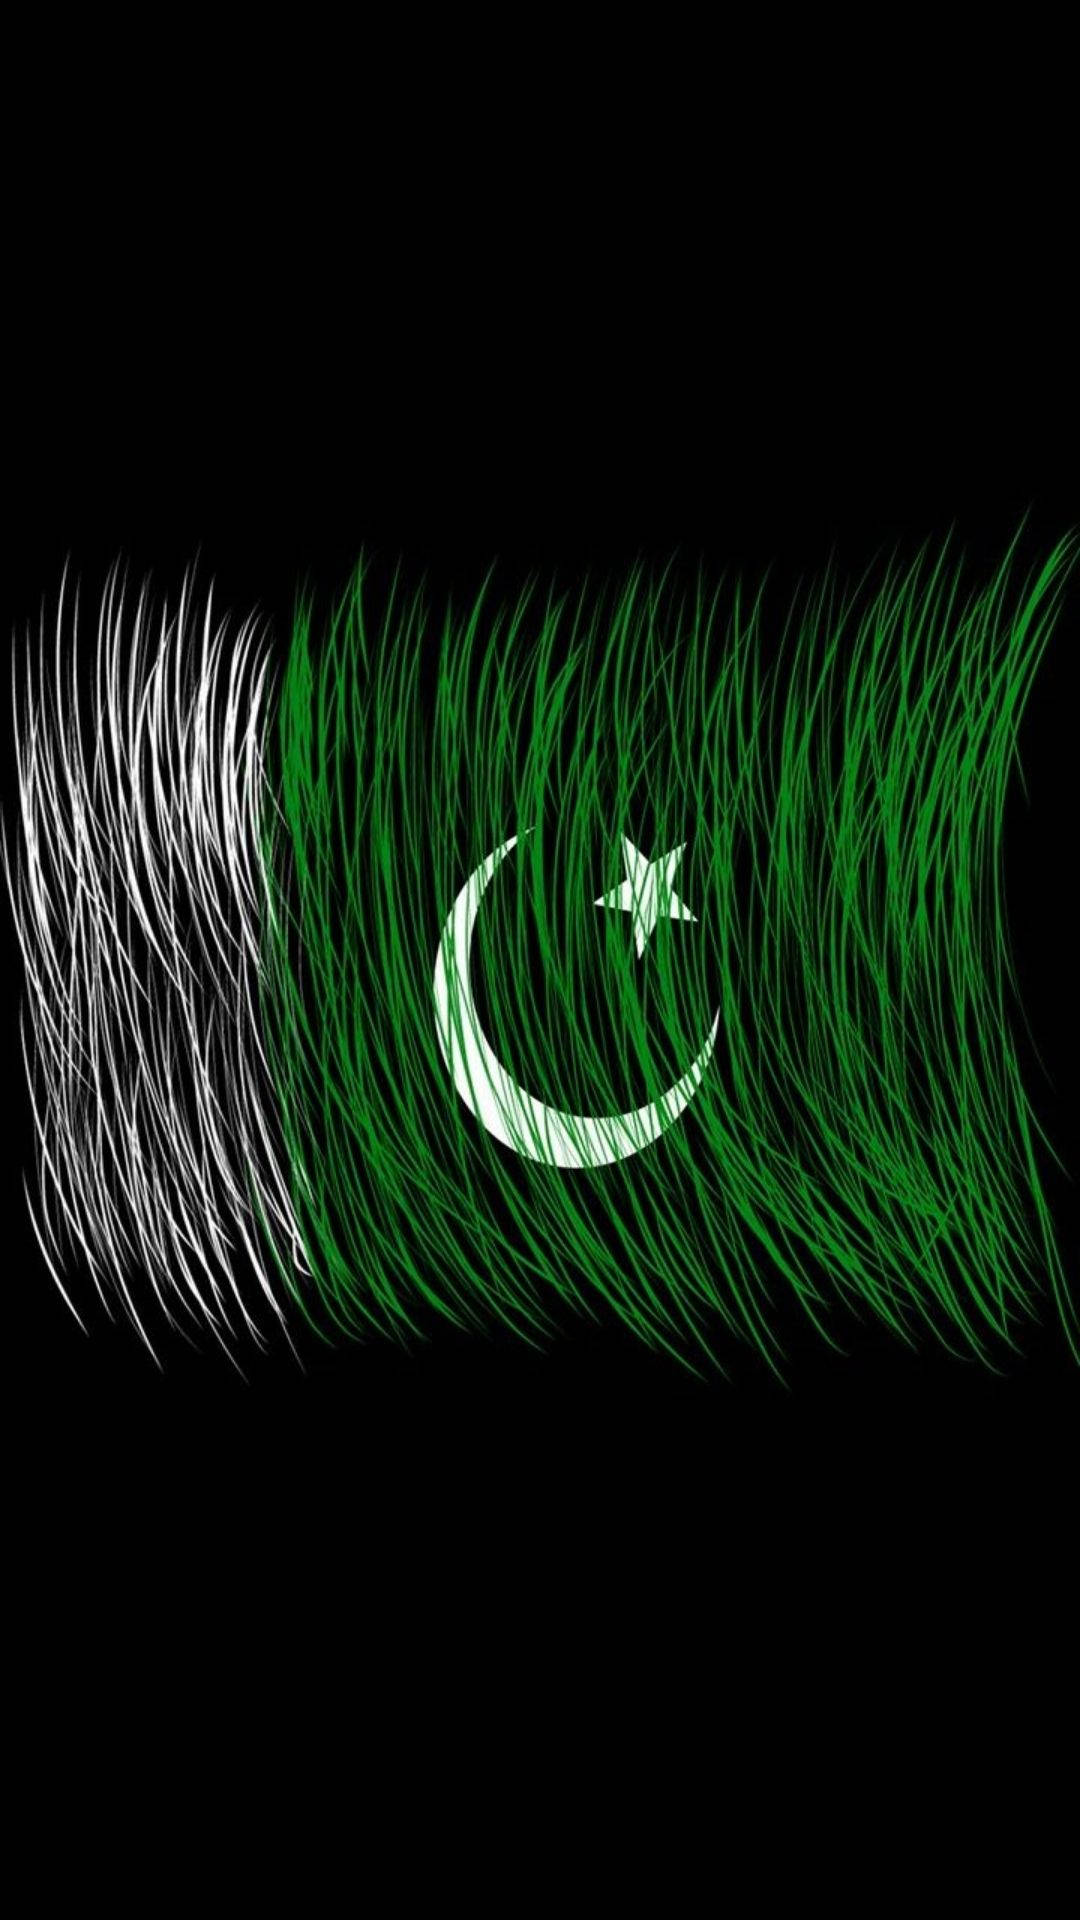 Pakistan Logo In Grass Wallpaper